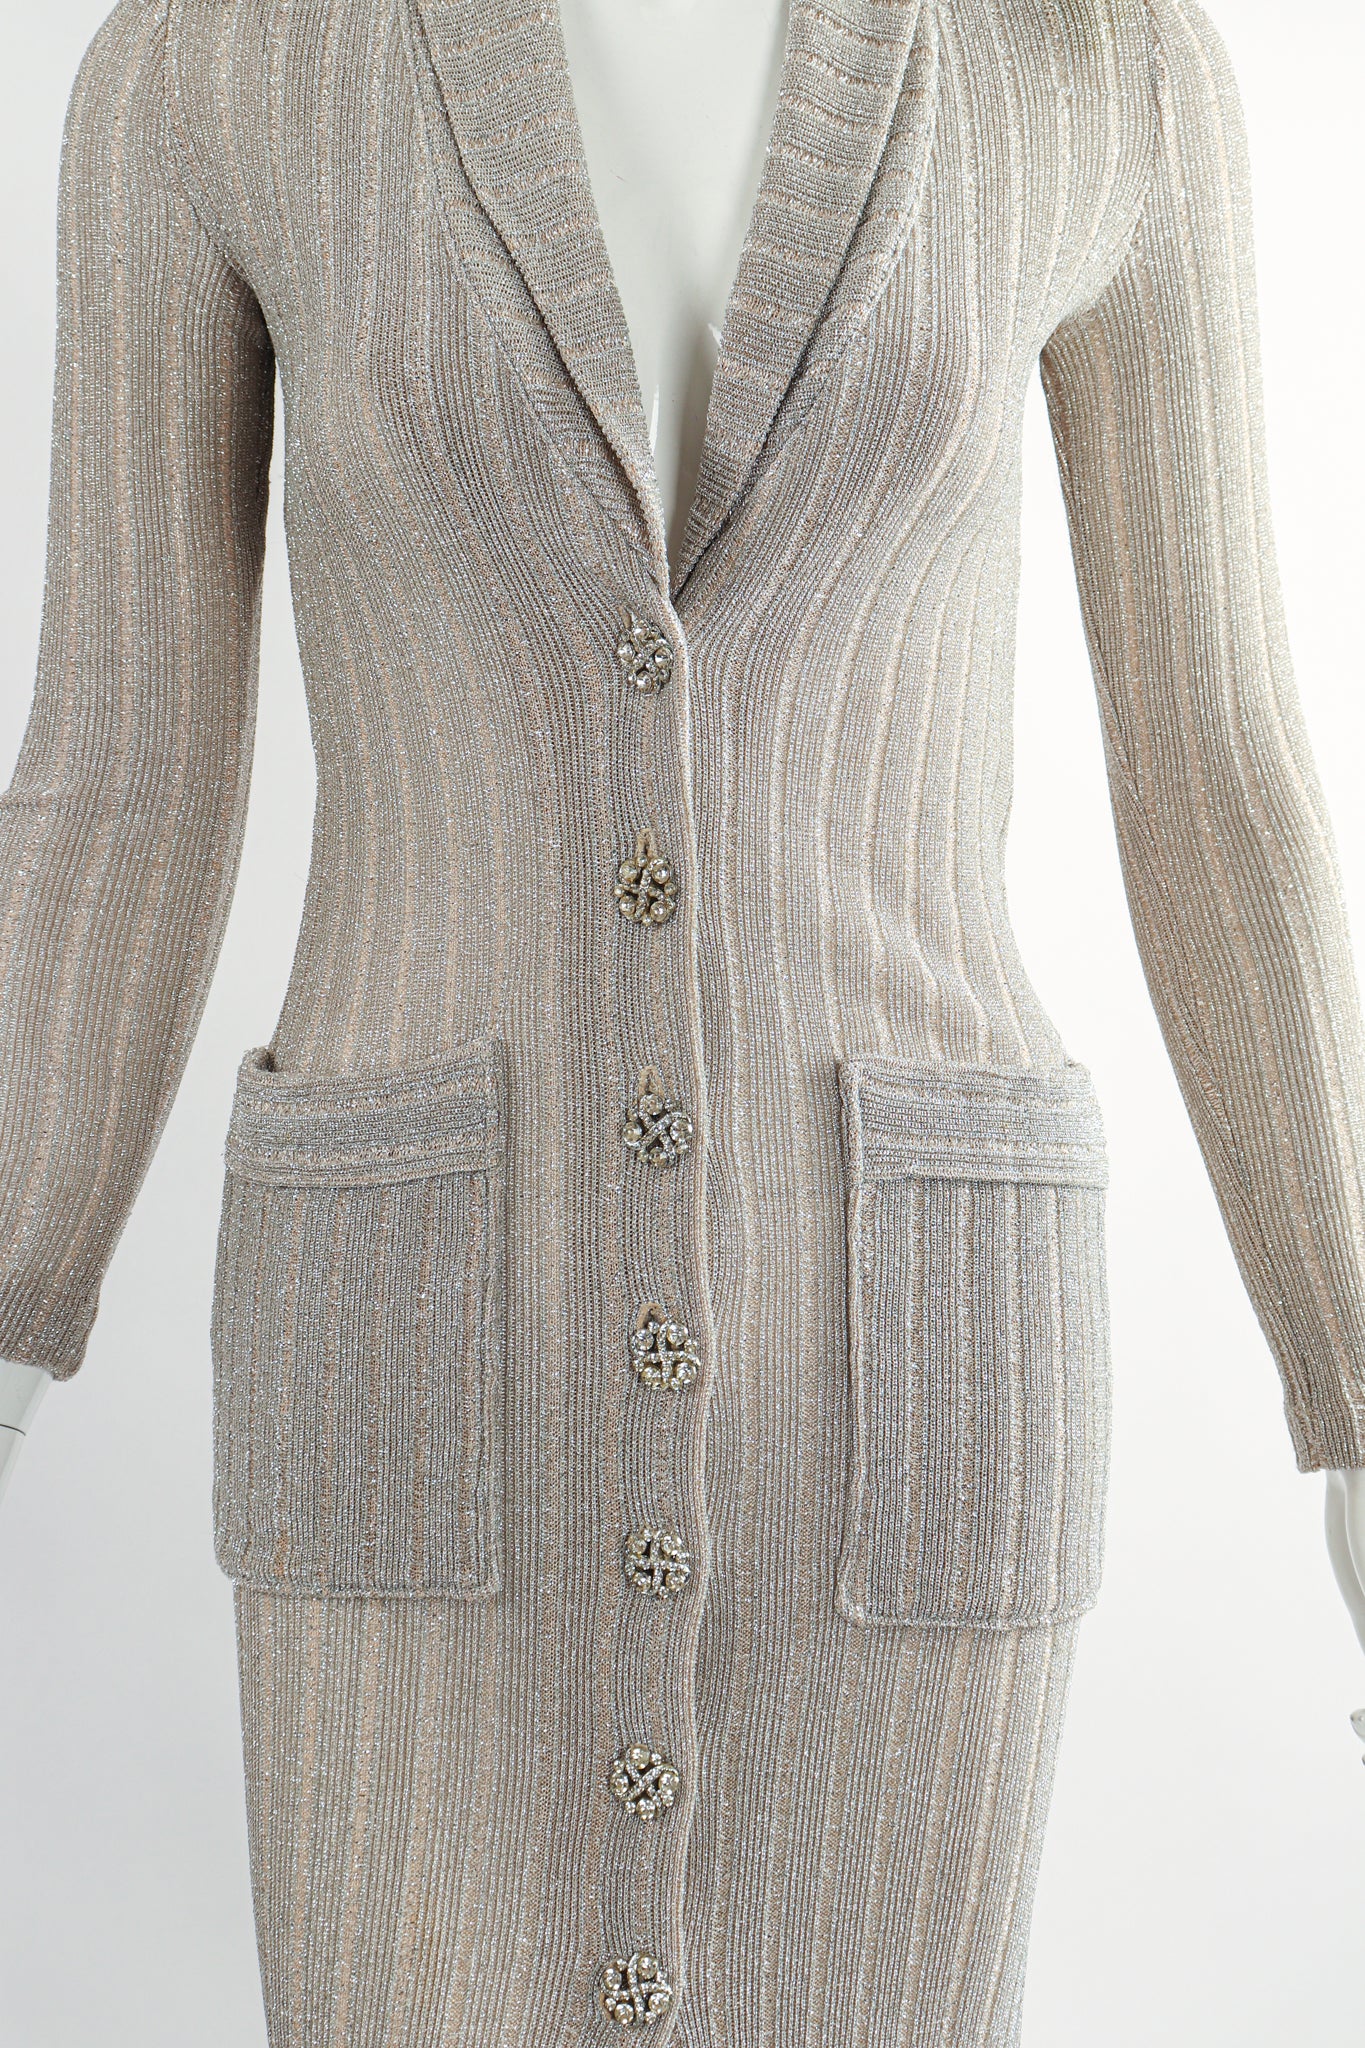 Vintage John Kloss for Cira Long Sheer Metallic Duster Sweater On Mannequin Waist detail at Recess LA